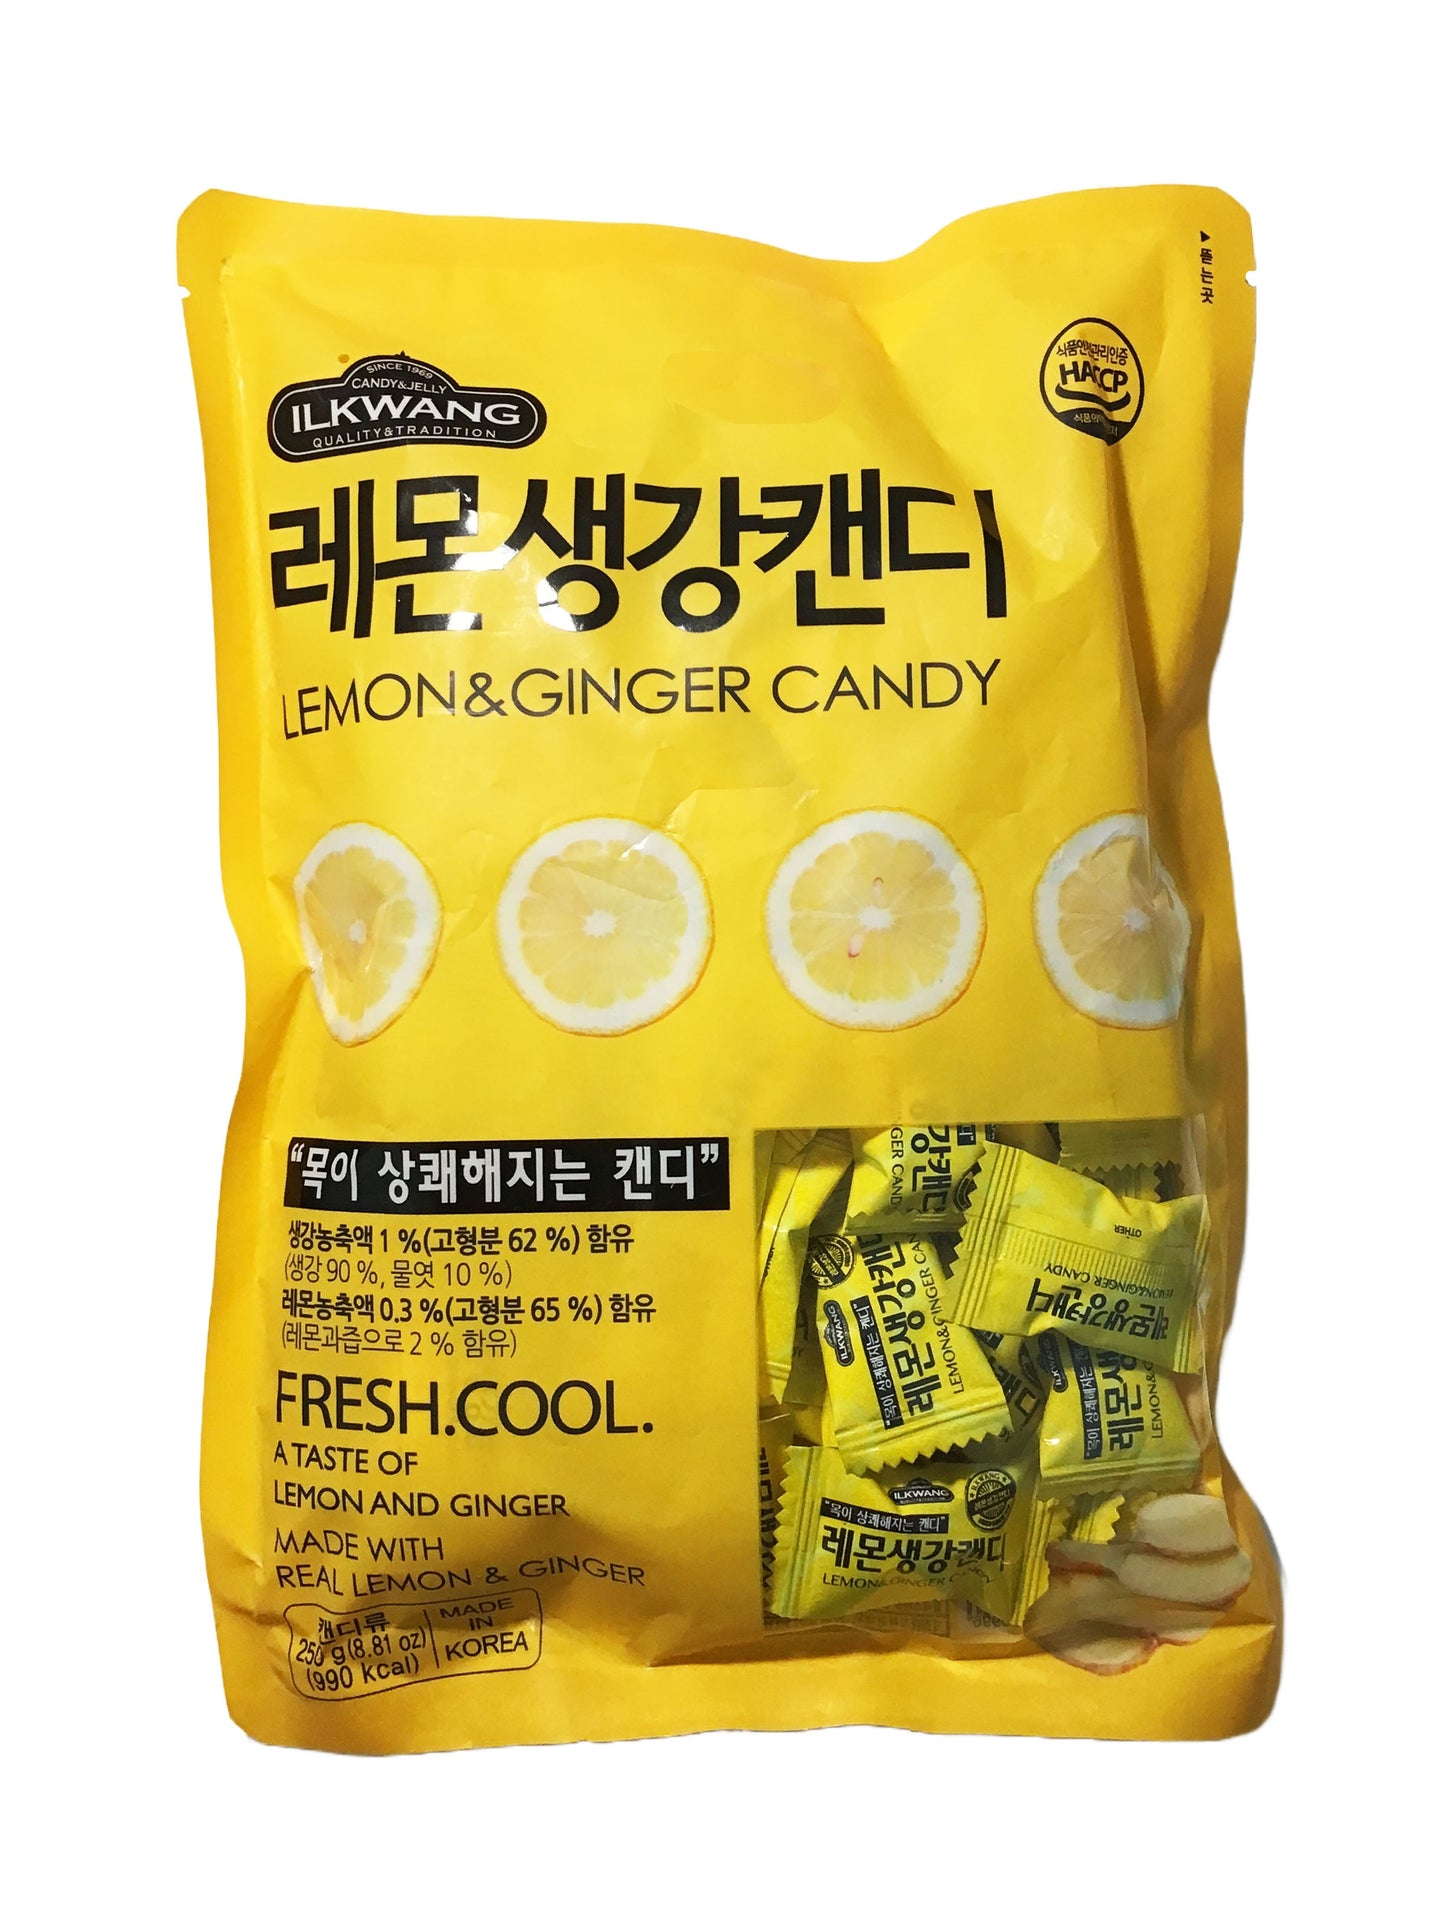 ILKWANG Lemon and Ginger Candy 檸檬薑糖 8.81oz (250g)